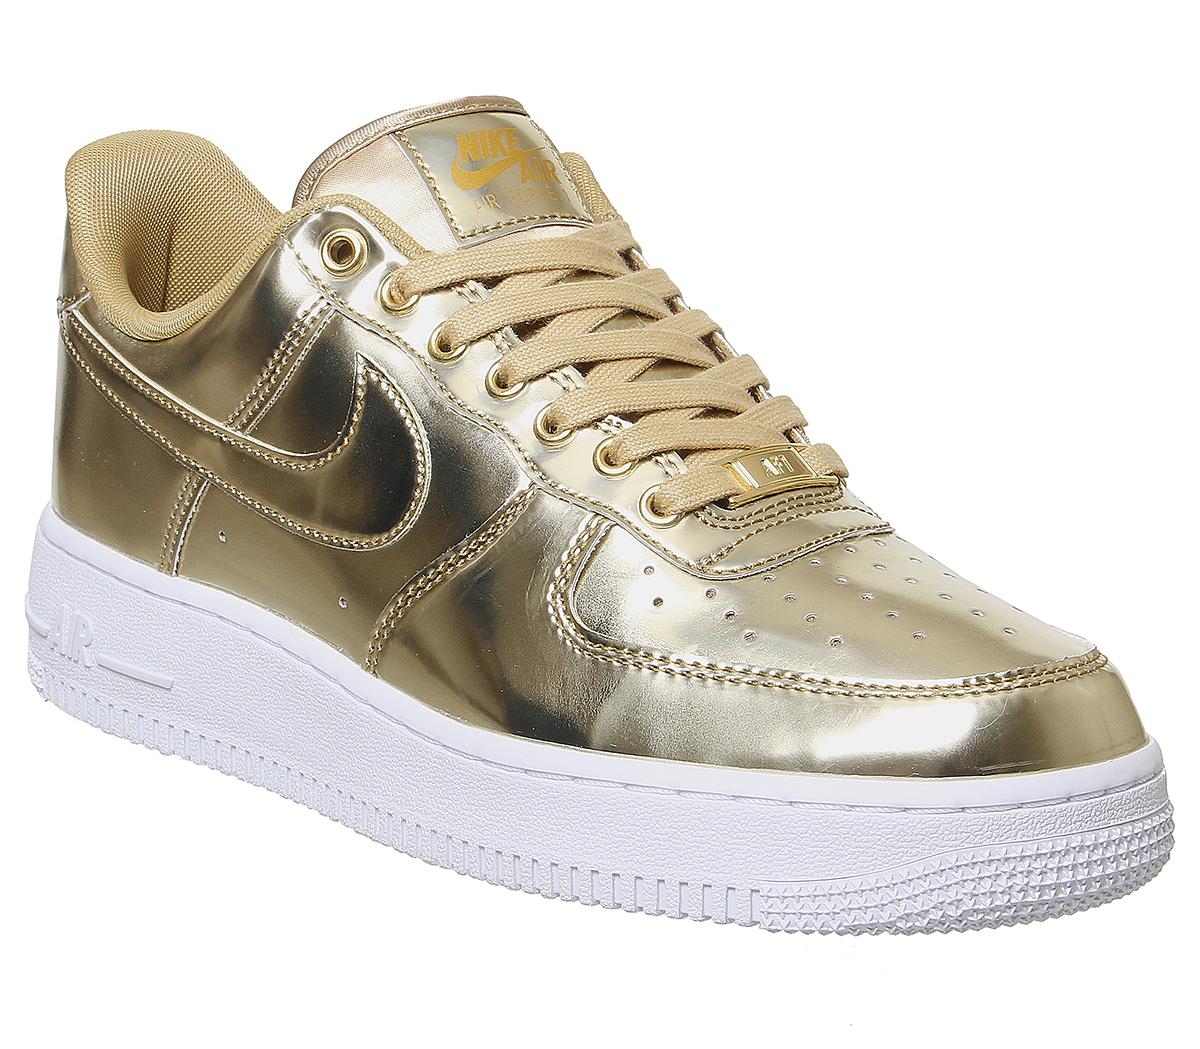 Nike Air Force 1 07 Trainers Metallic Gold - Sneaker damen